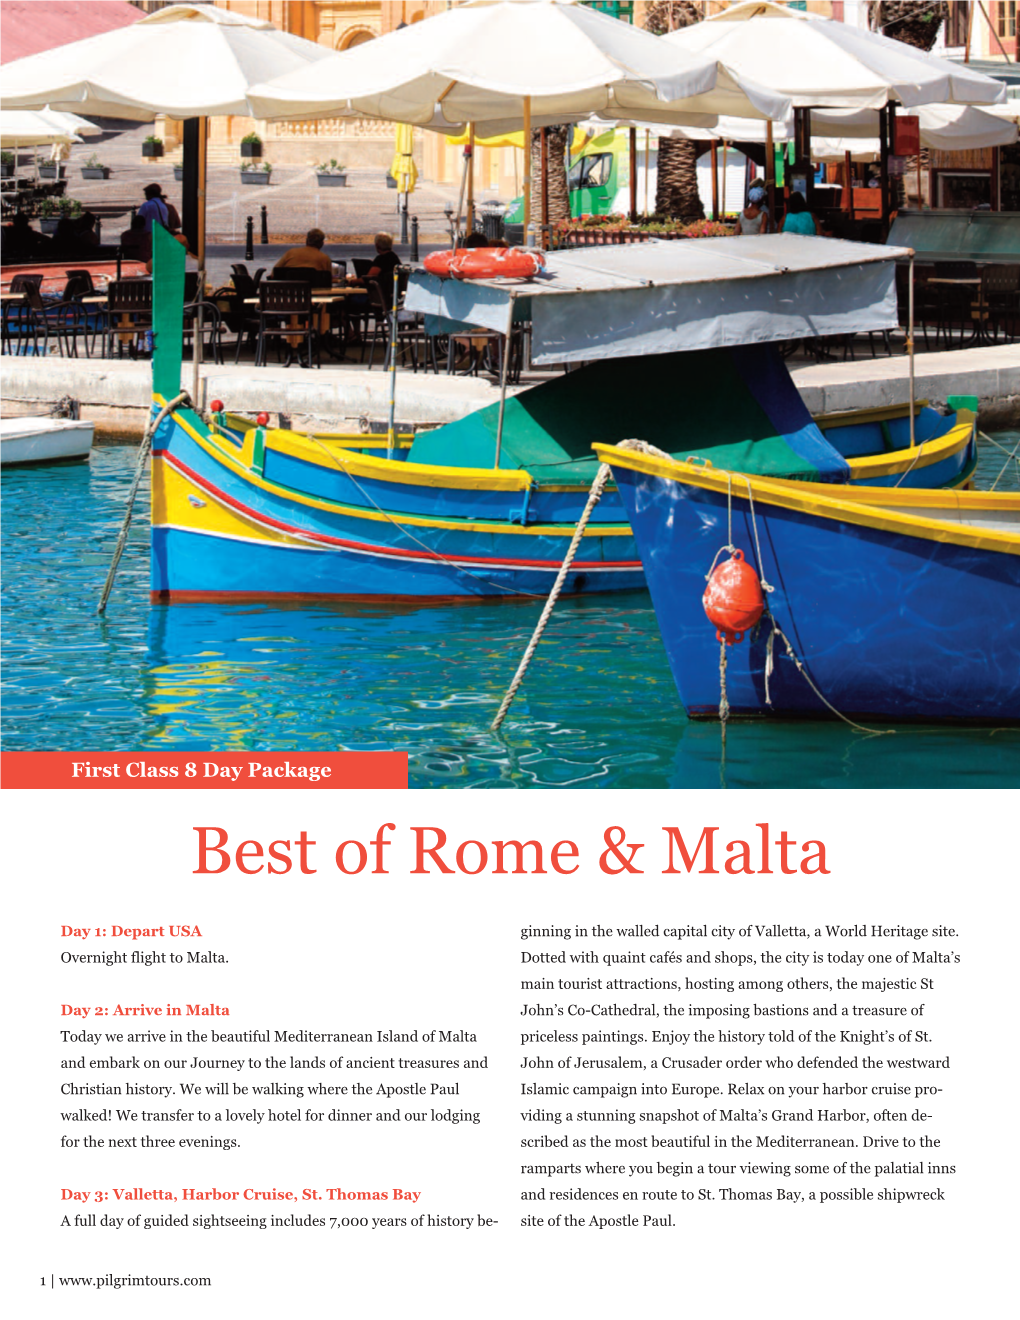 Best of Rome & Malta